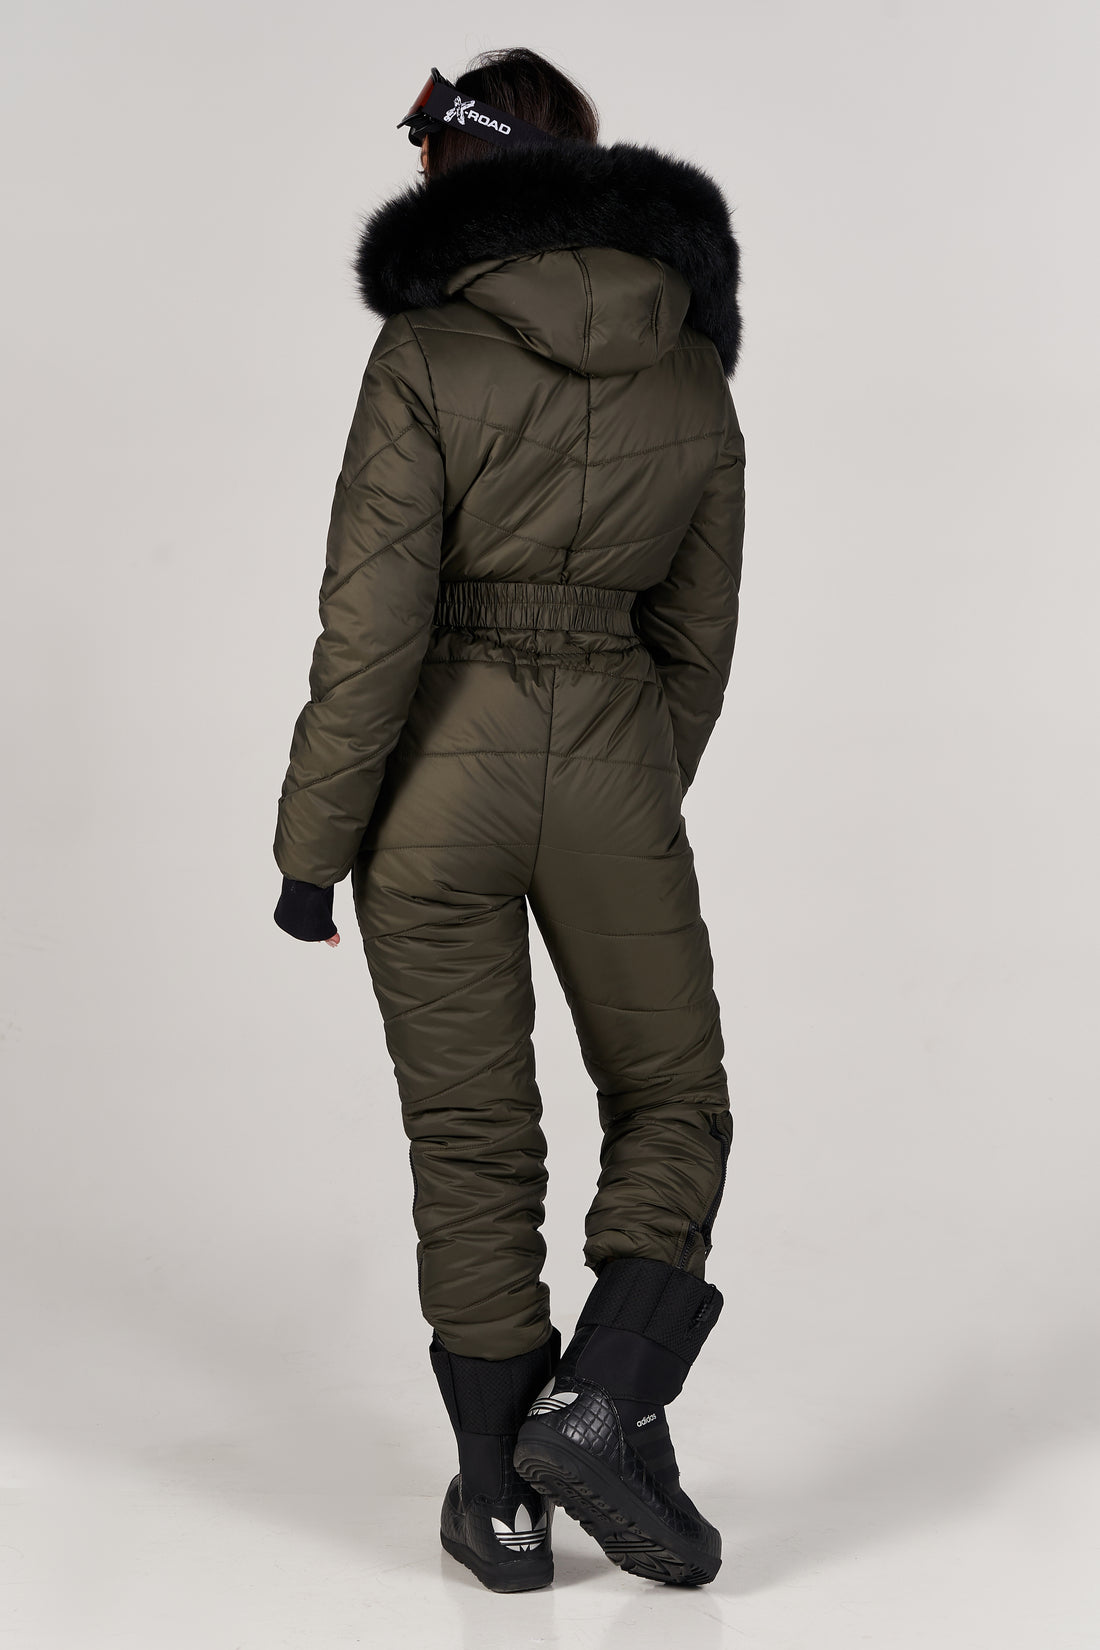 Olive one piece snow suit ELIAS - KHAKI winter ski clothes for women